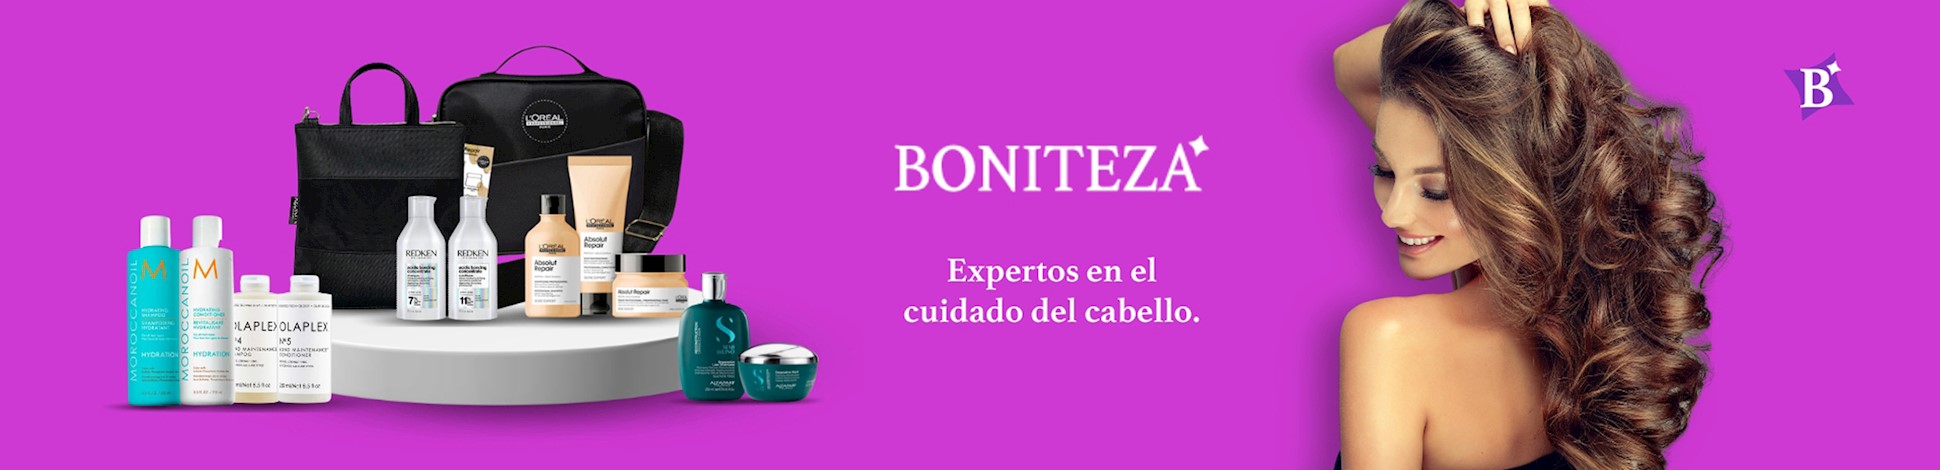 Banner Desktop Boniteza.jpg